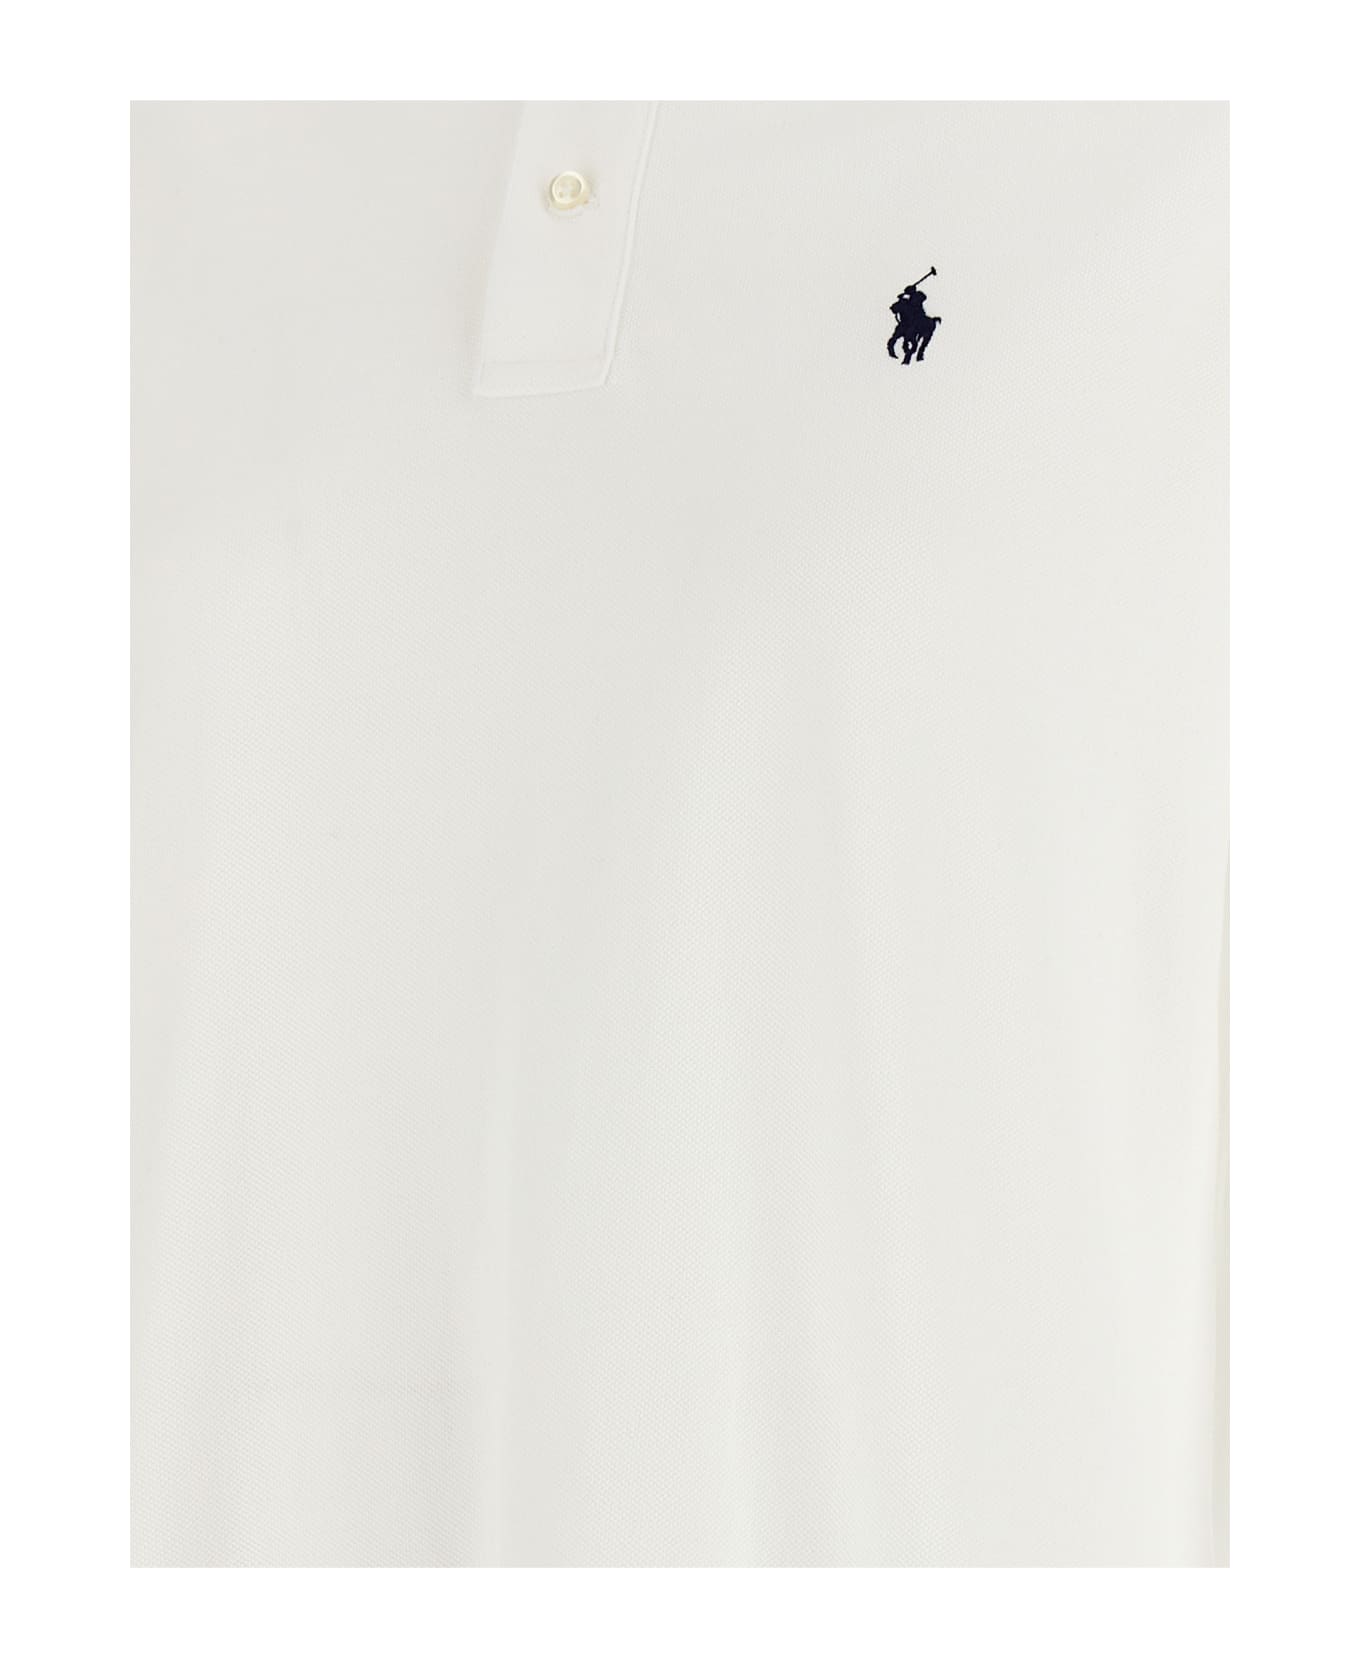 Polo Ralph Lauren 'polo' Dress - White ポロシャツ